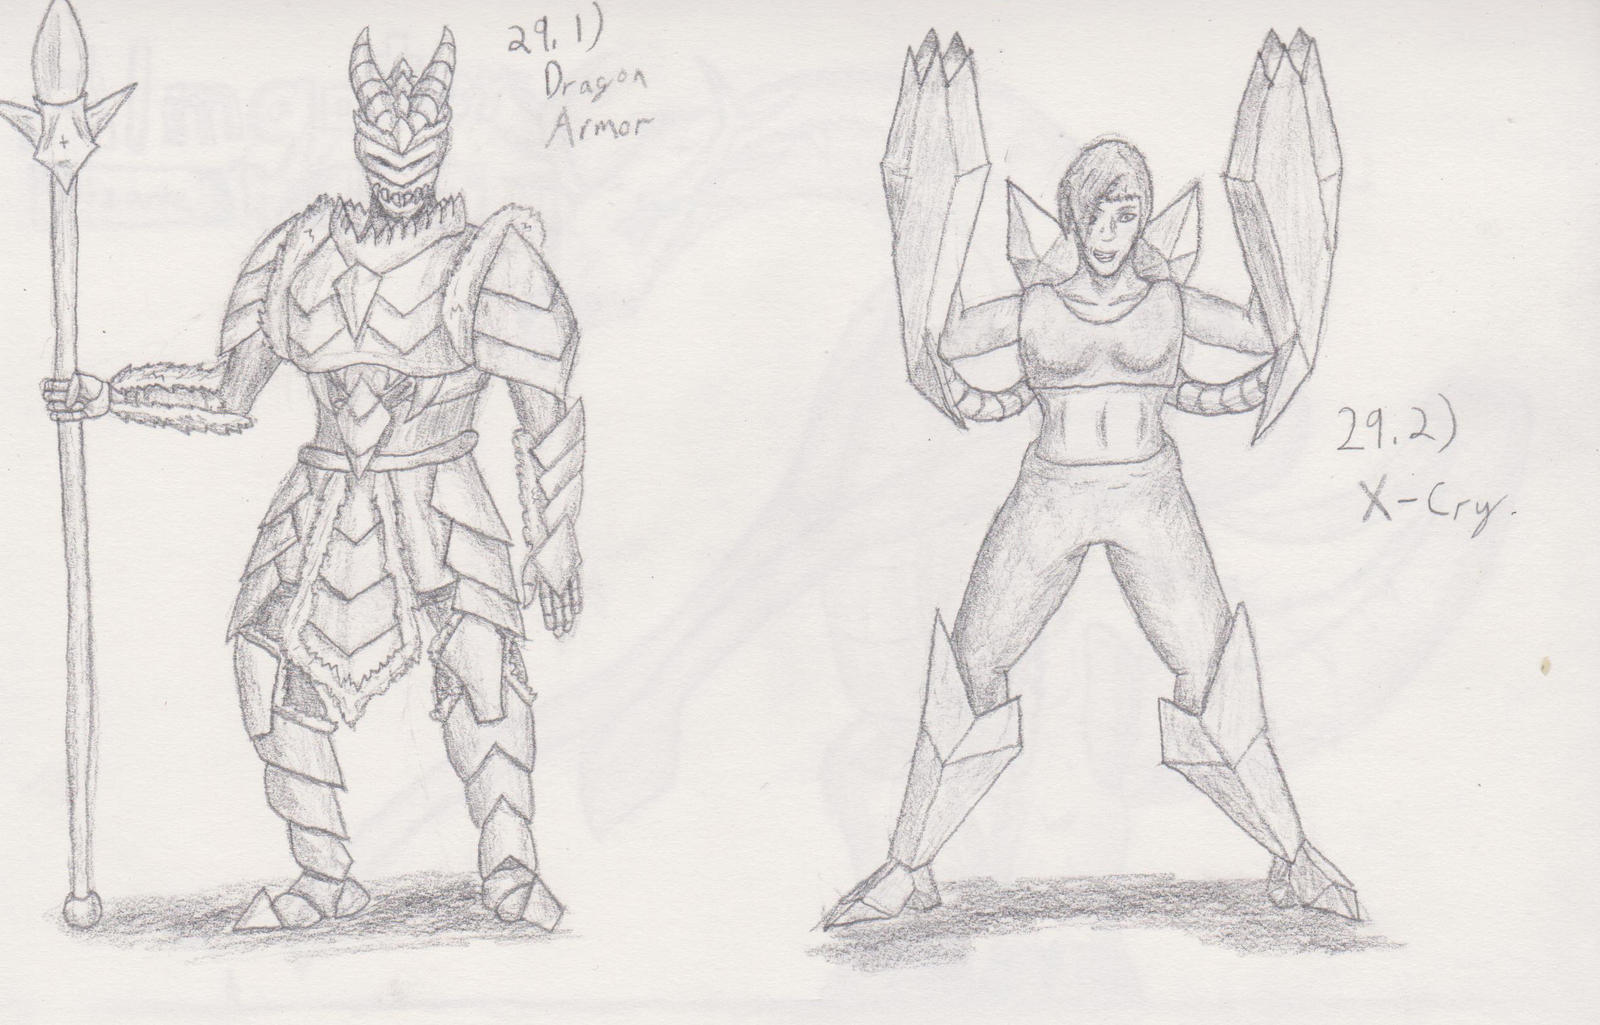 Figure 29 - Dragon Armor and X-Cry